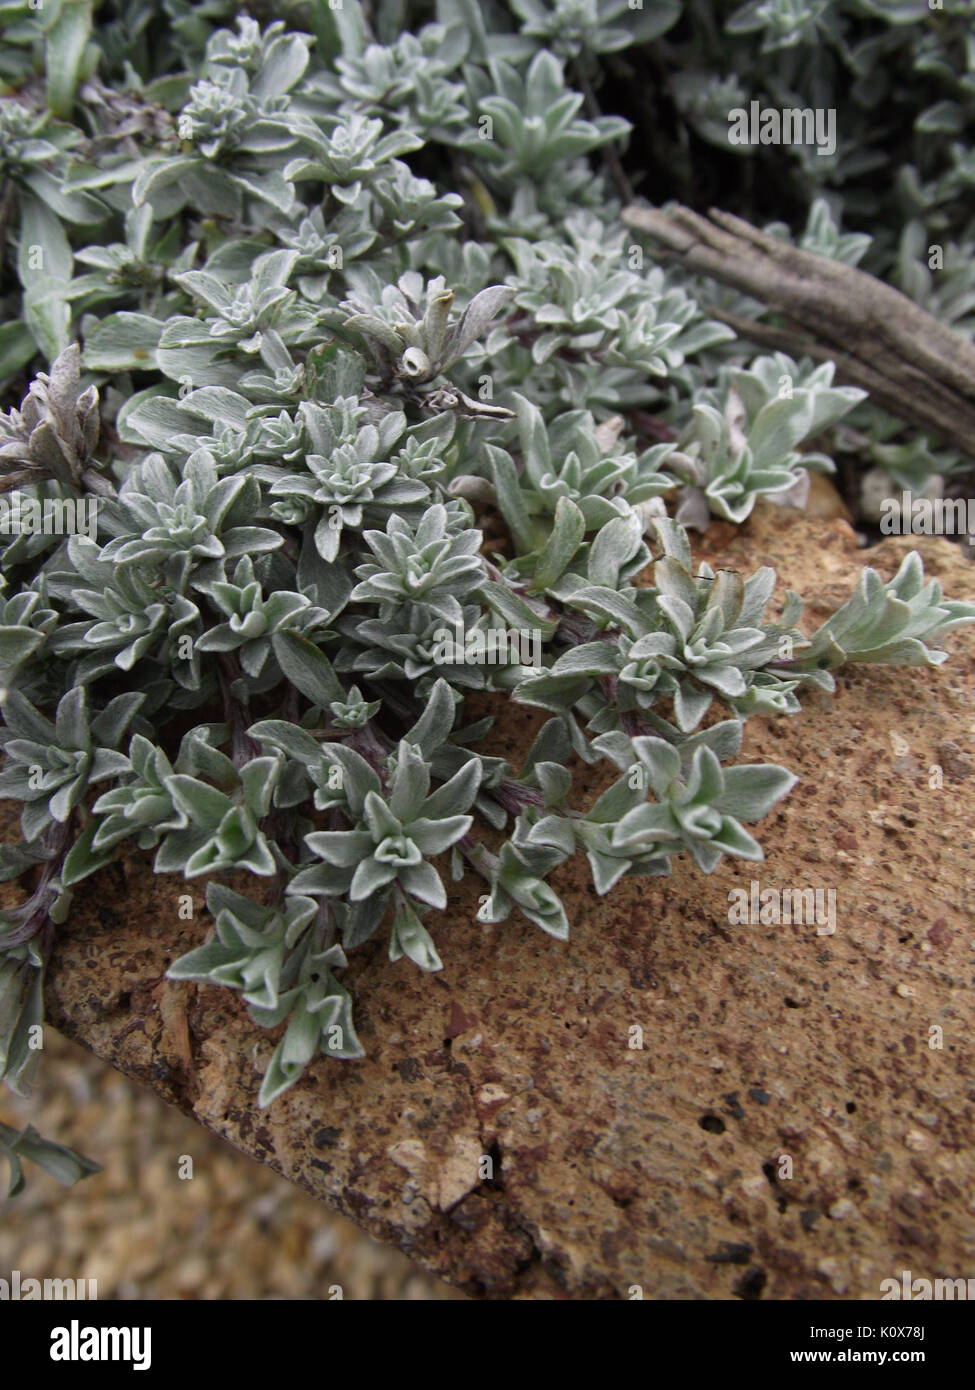 Antennaria nyewood Stock Photo